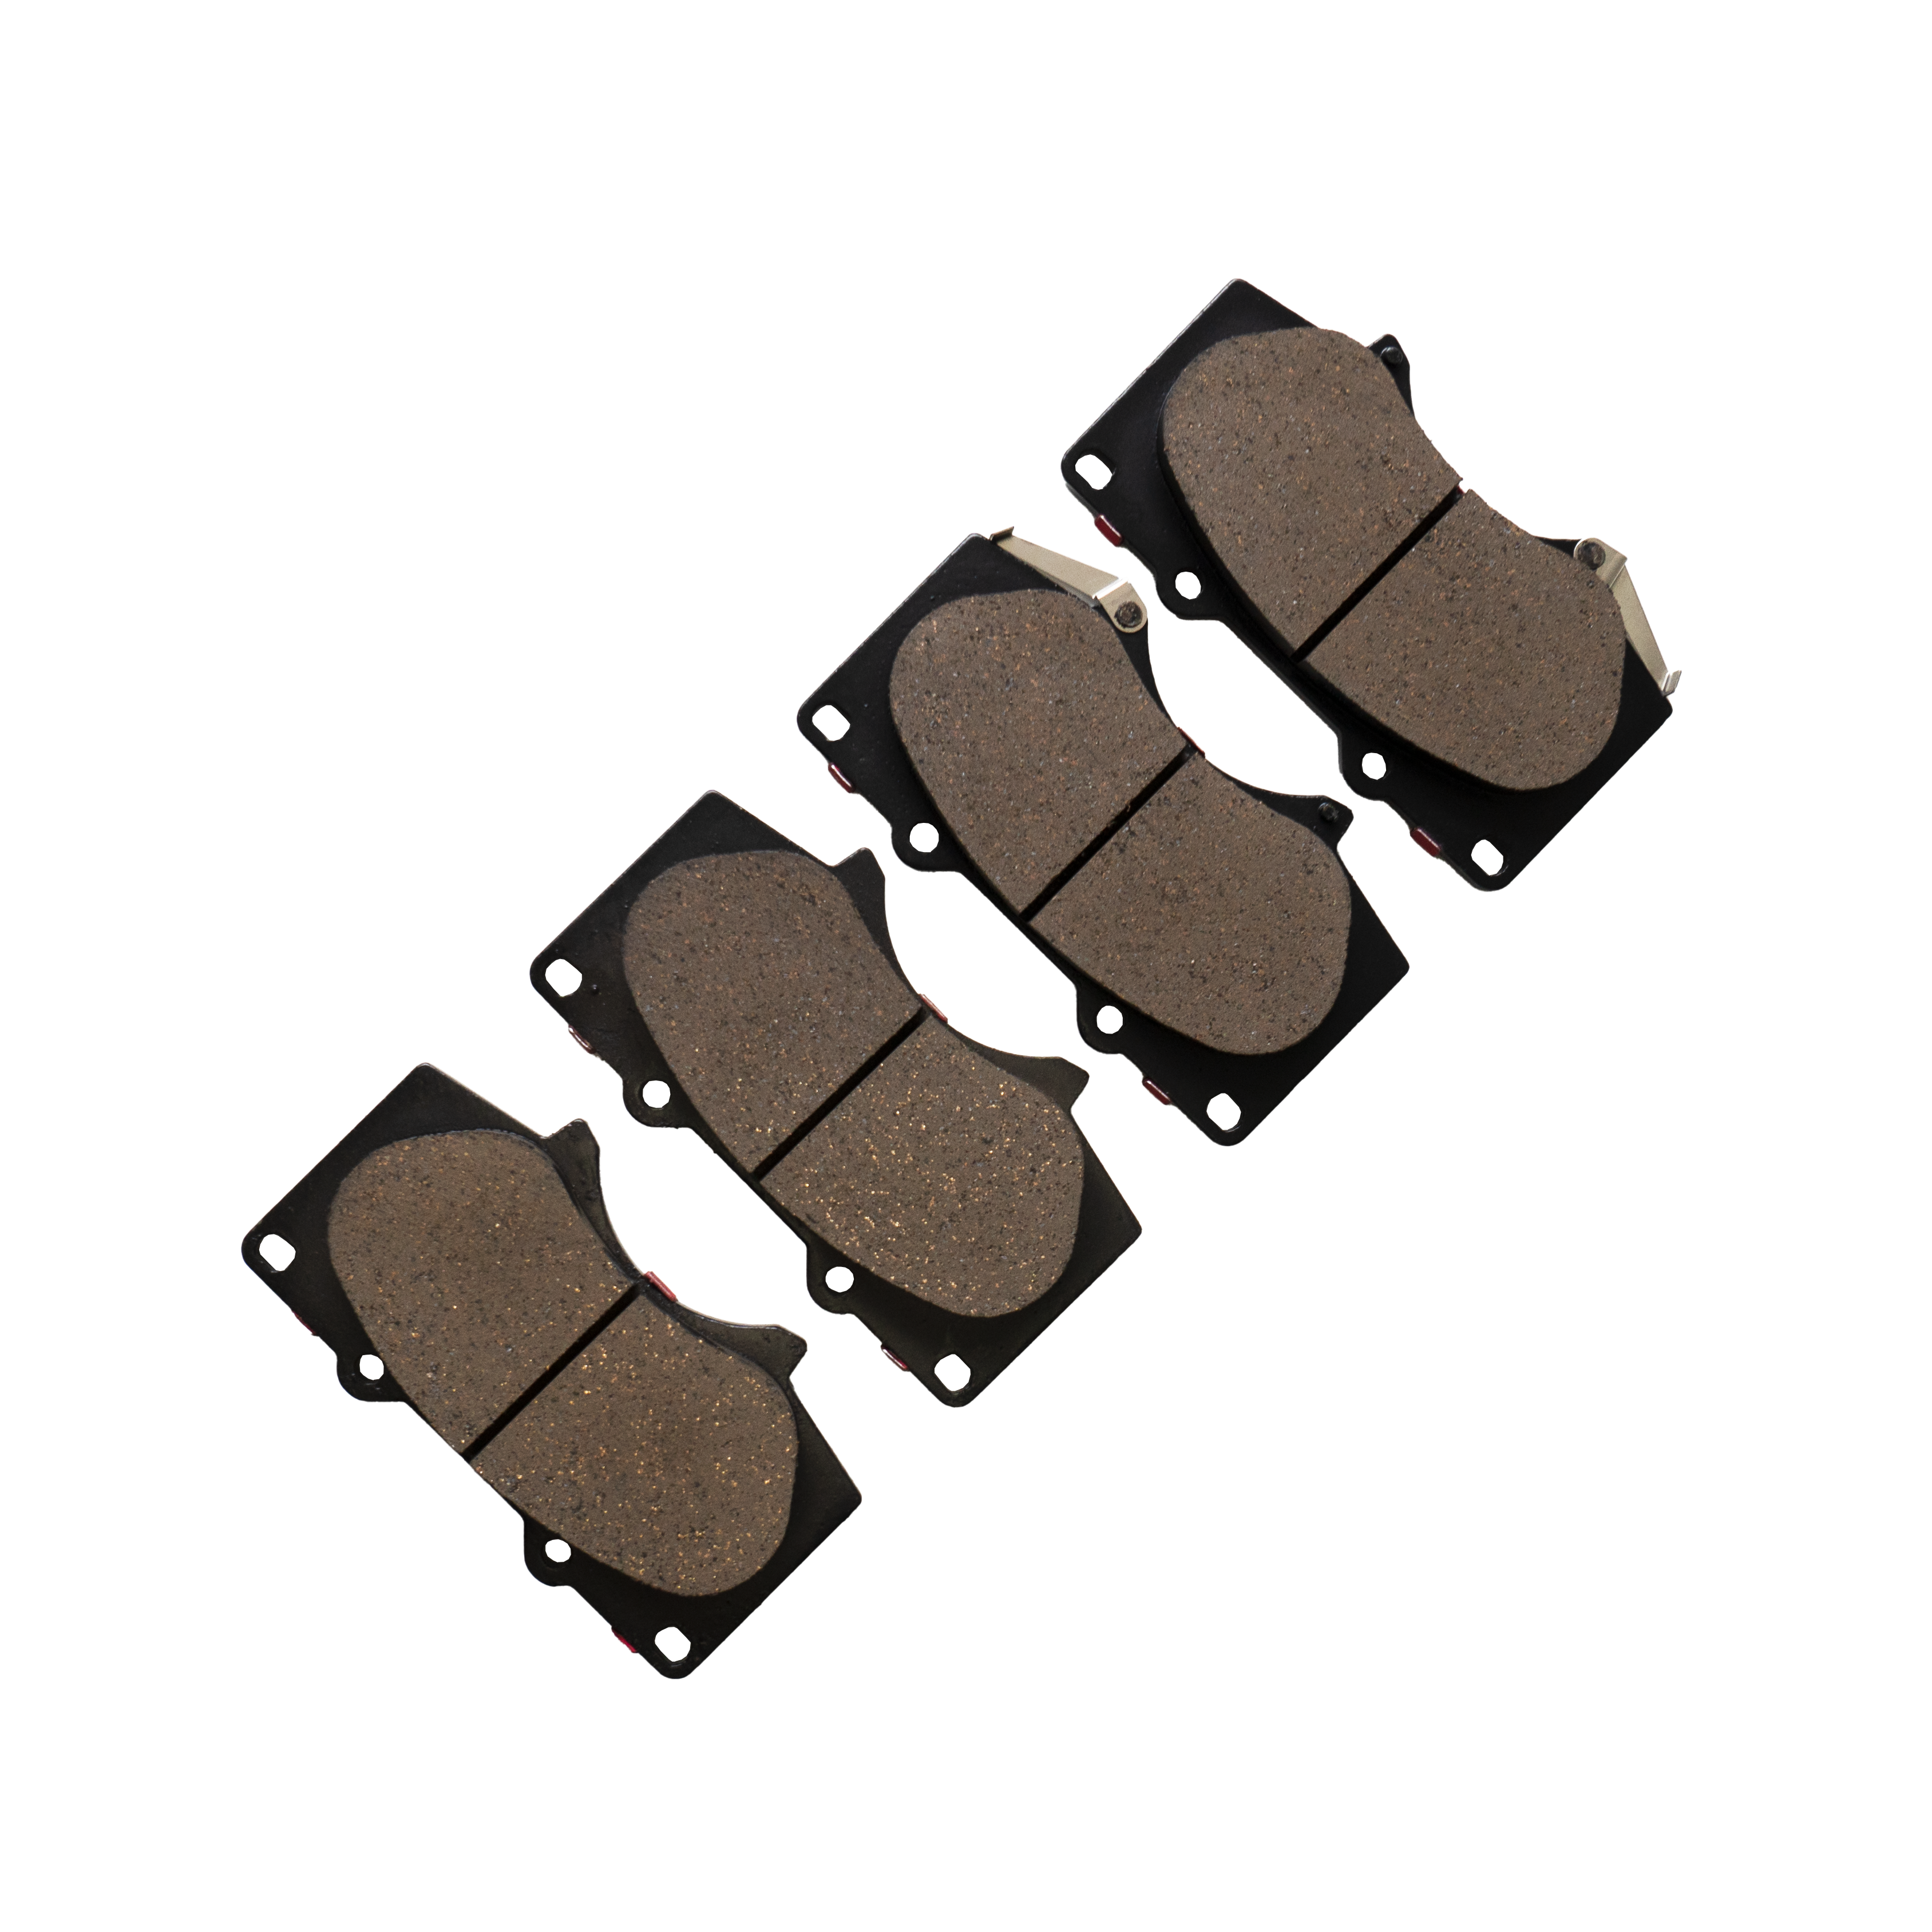 200 Series PowerStop Titanium Ceramic REAR Brake Pads